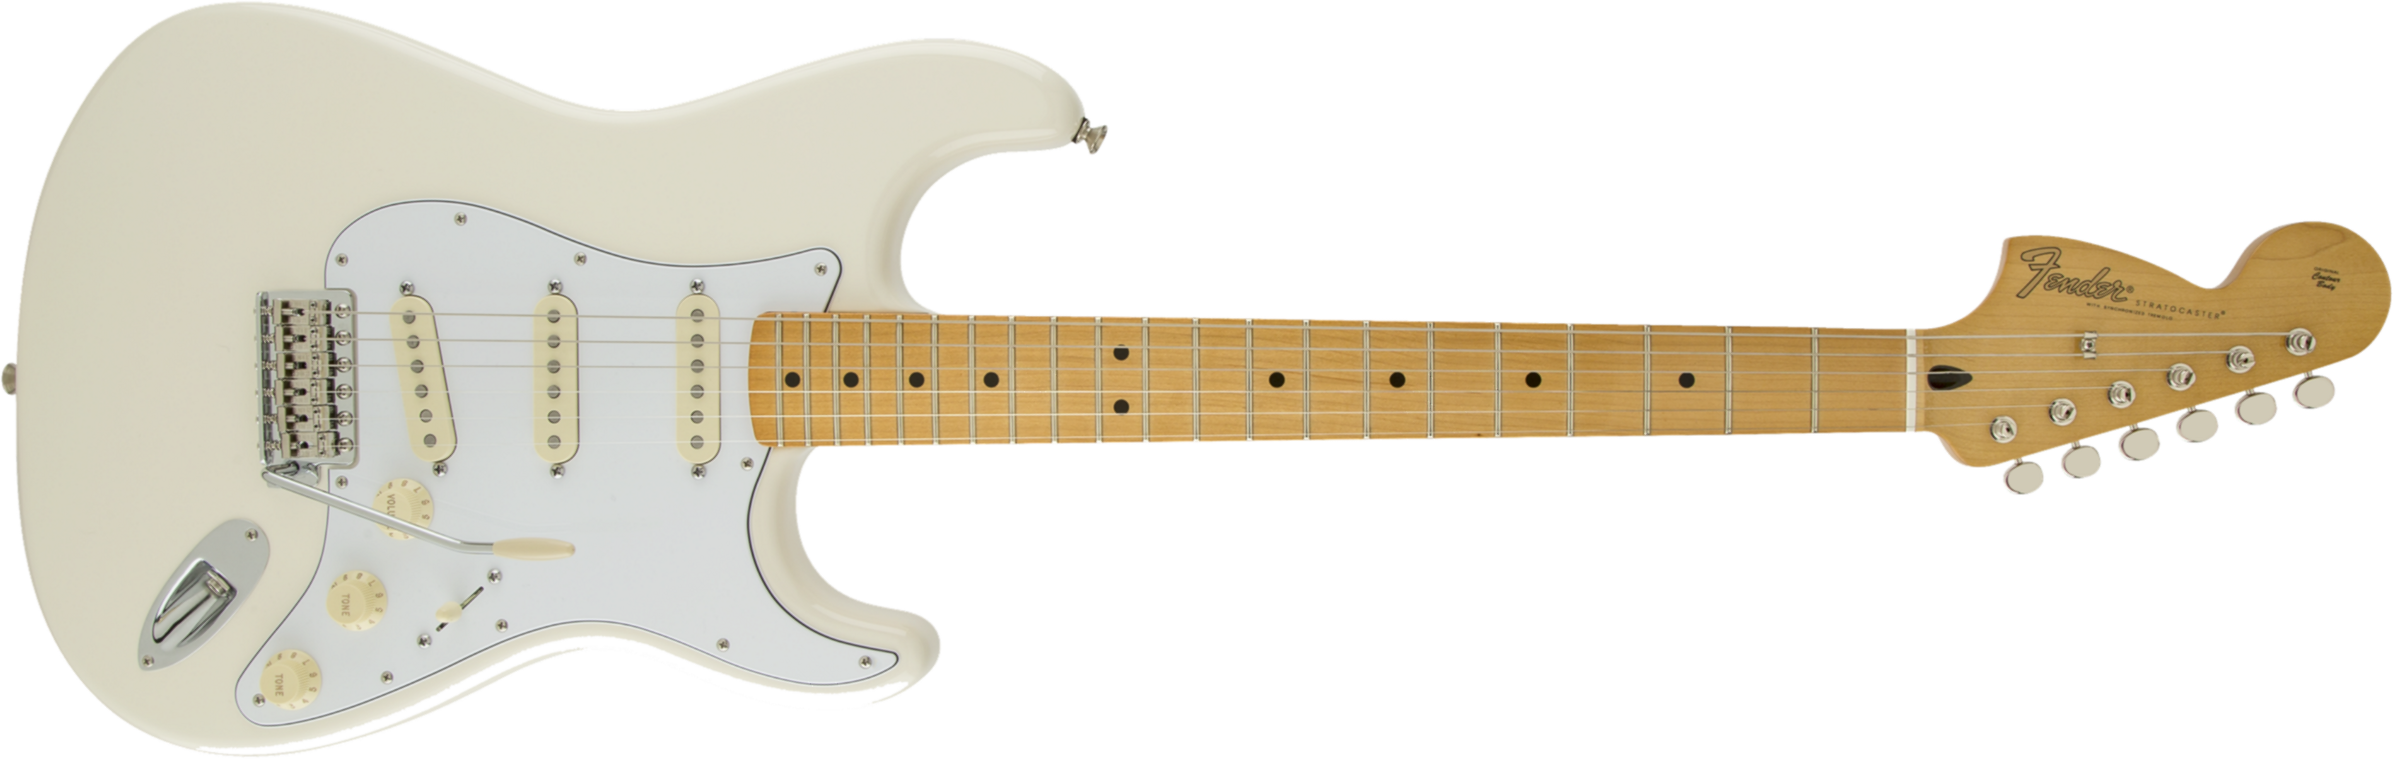 Fender Jimi Hendrix Stratocaster (mex, Mn) - Olympic White - Elektrische gitaar in Str-vorm - Main picture